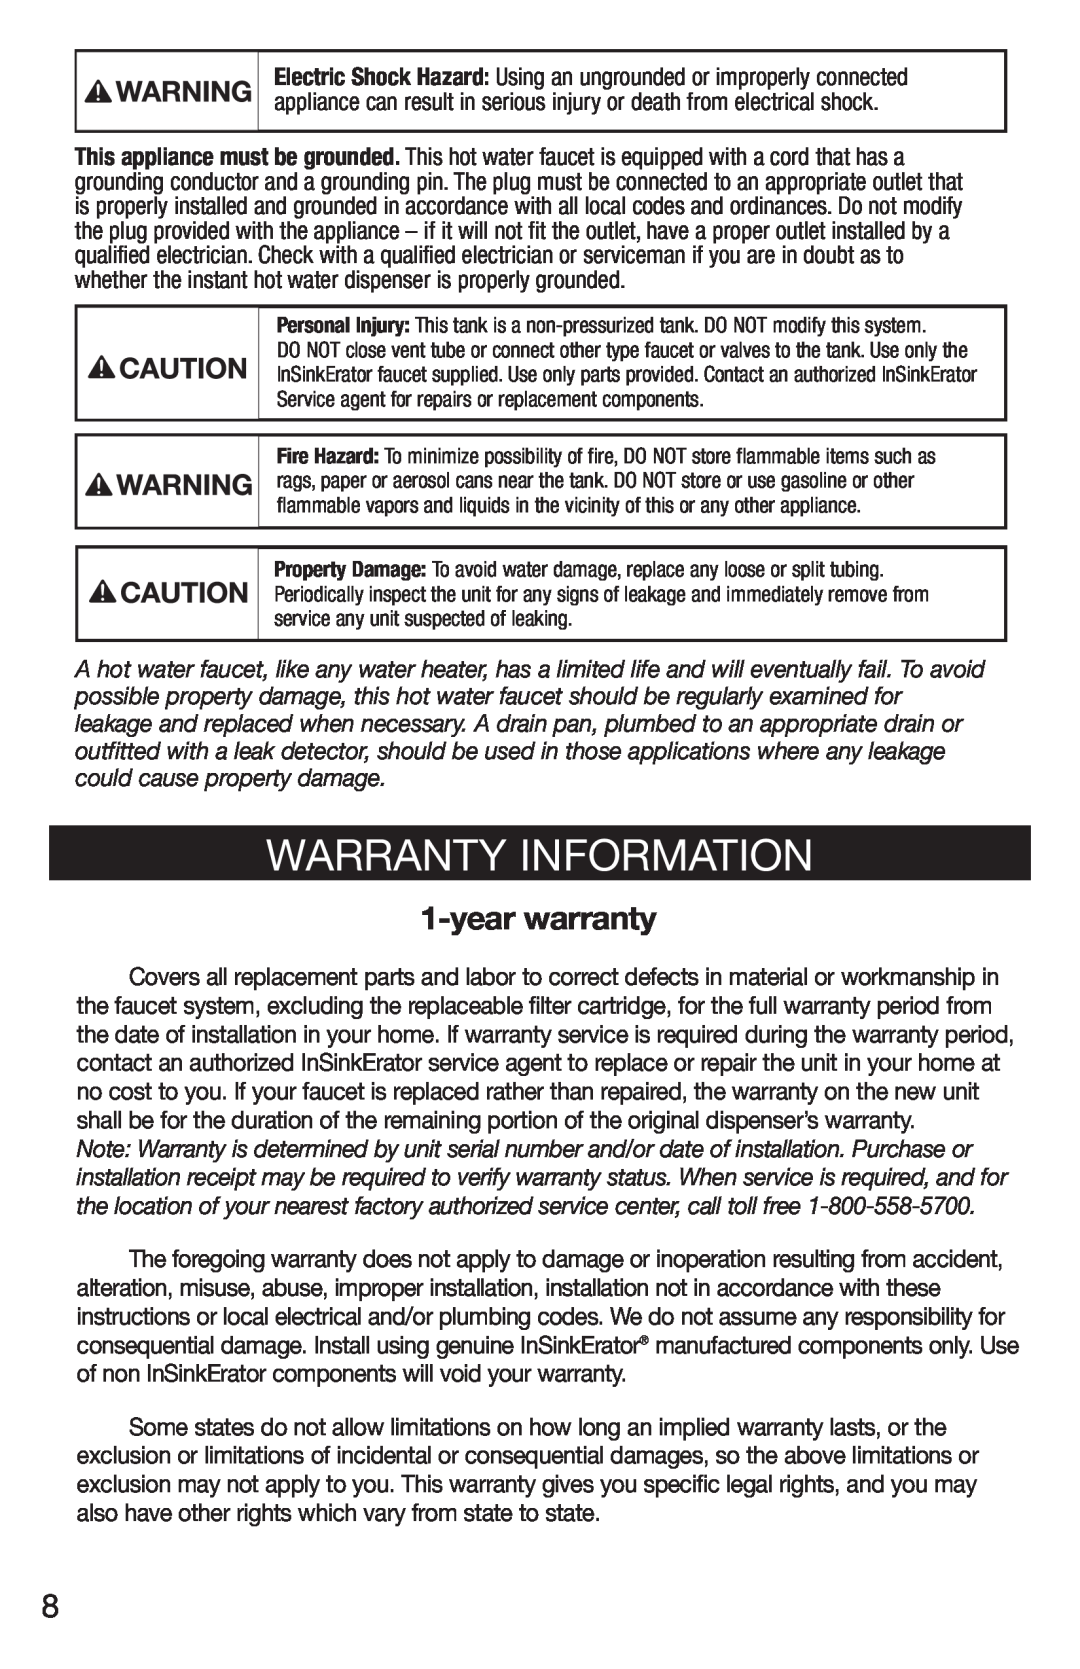 Emerson UWL owner manual Warranty Information, yearwarranty 